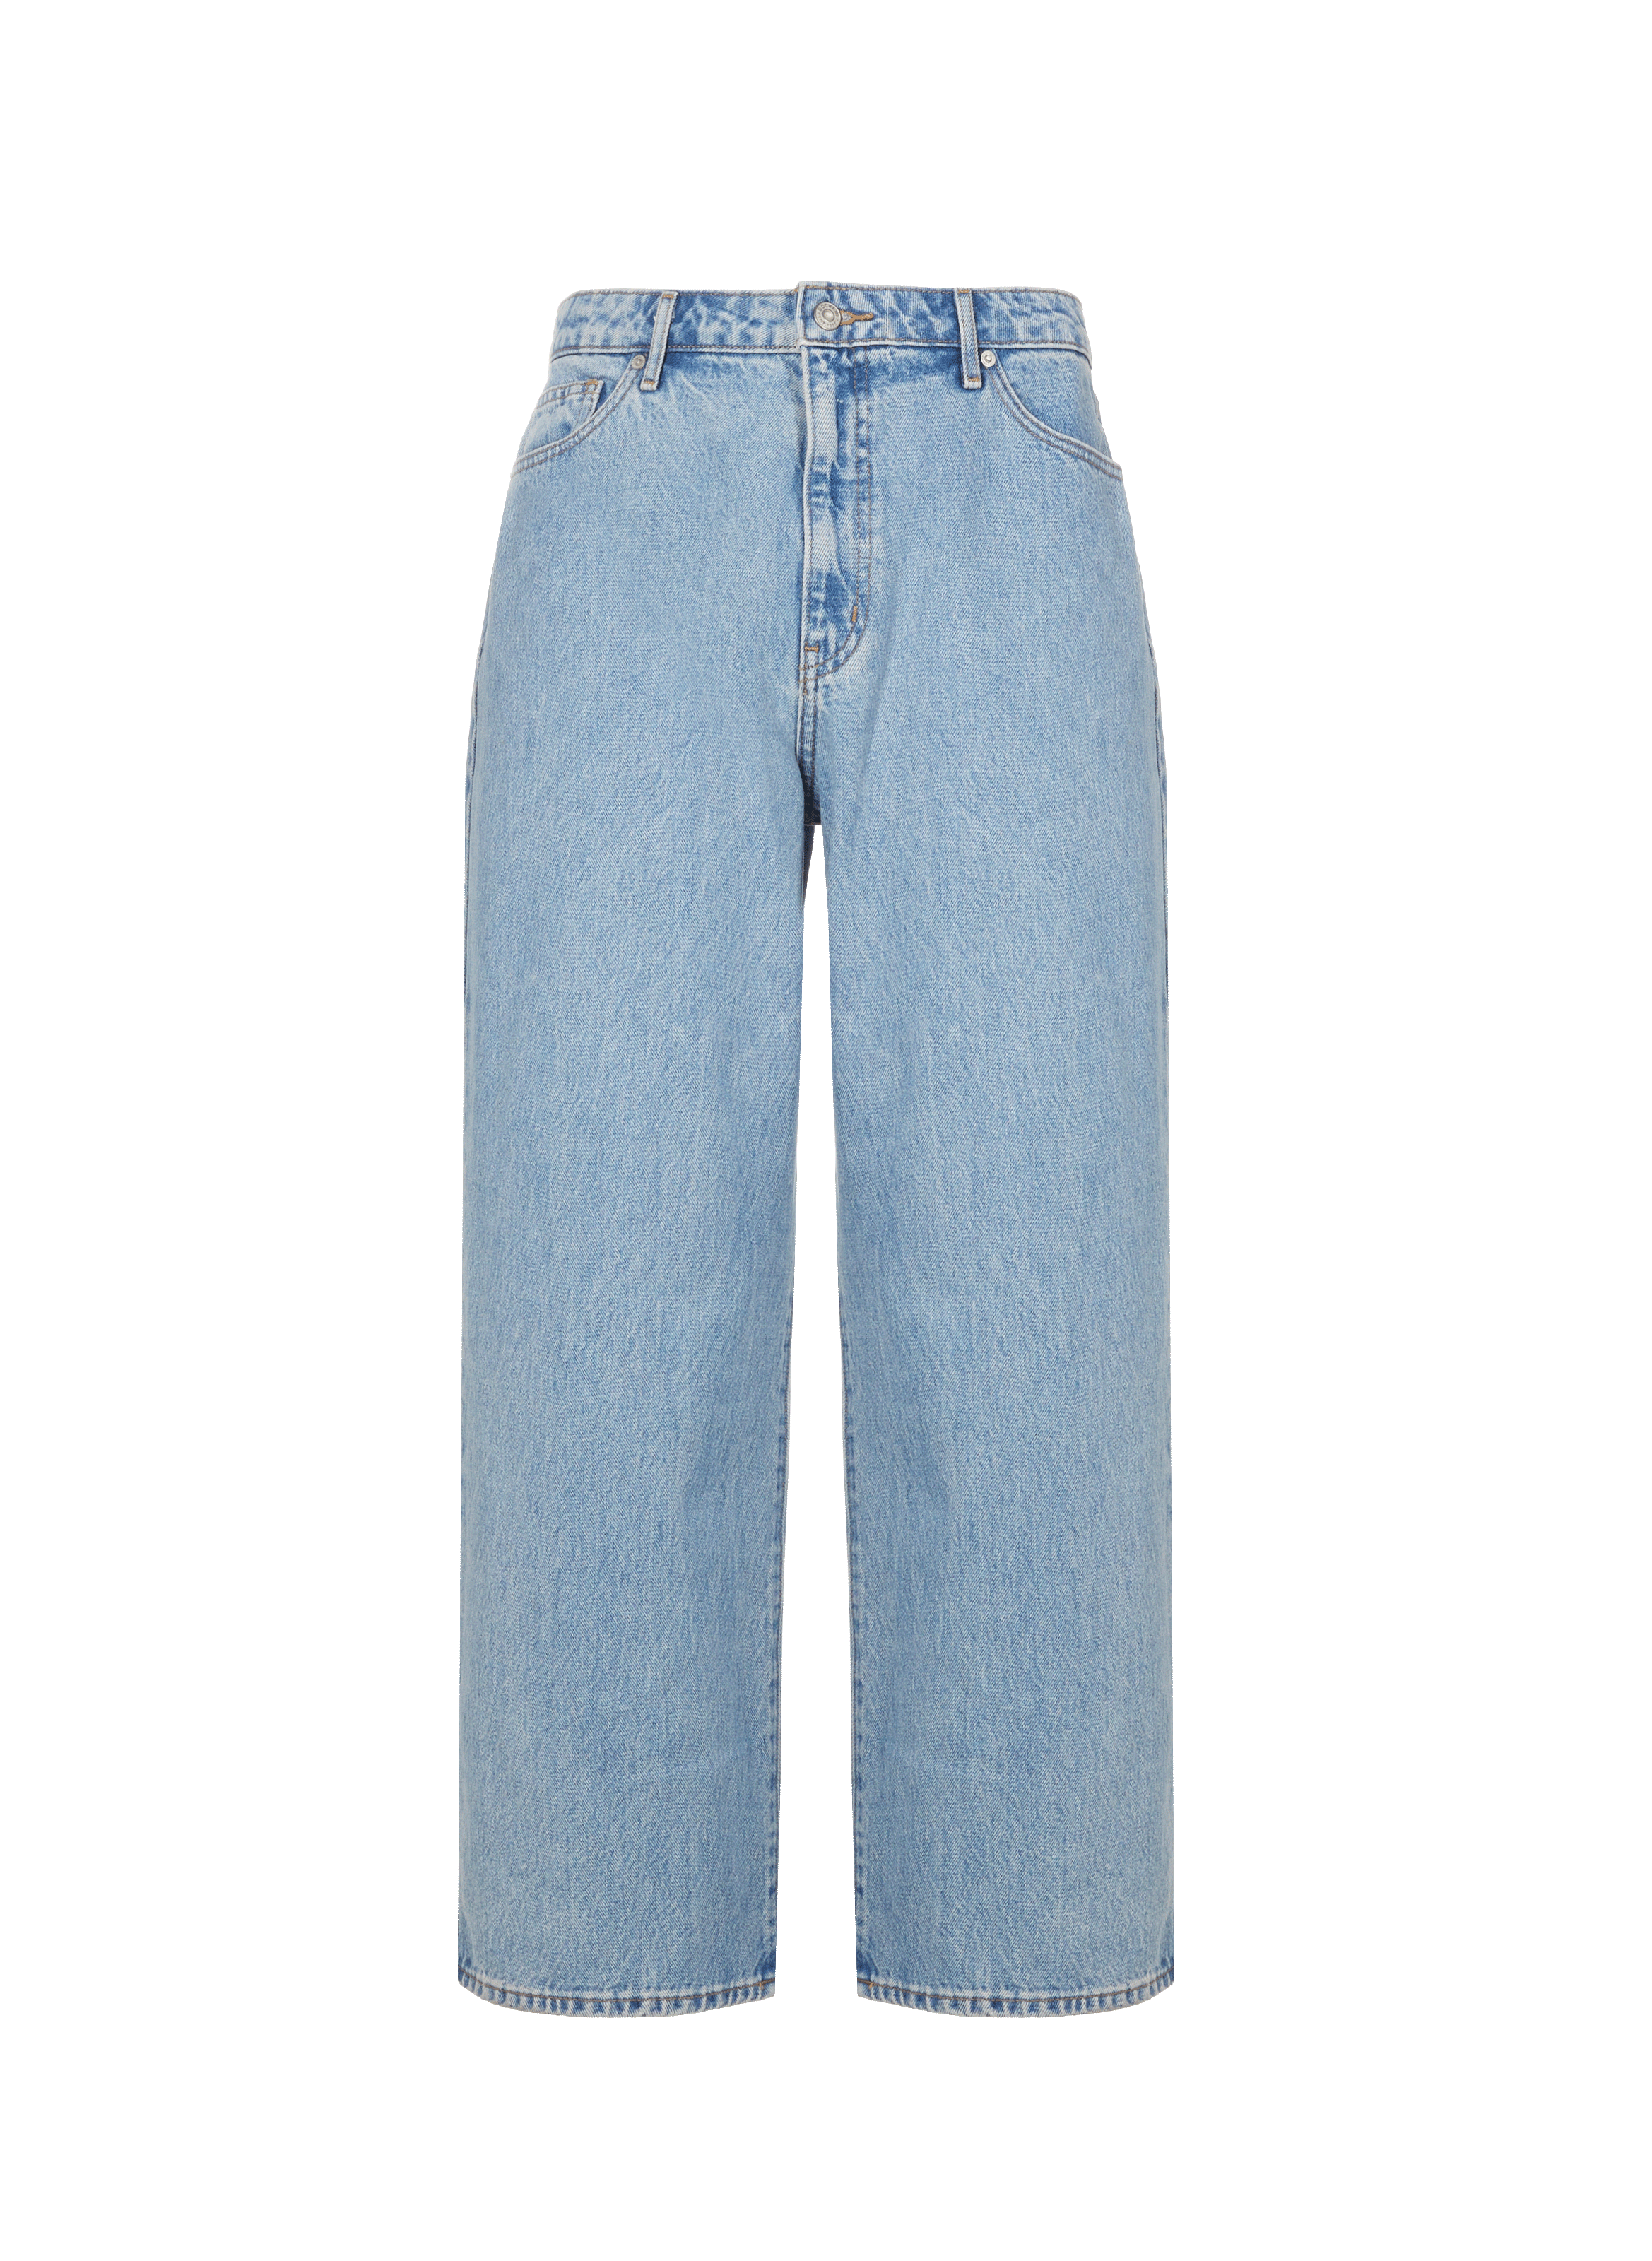 Dockers Khakis Cargo Style Beige Denim Cotton Jean Shorts Size 38 Men's |  eBay